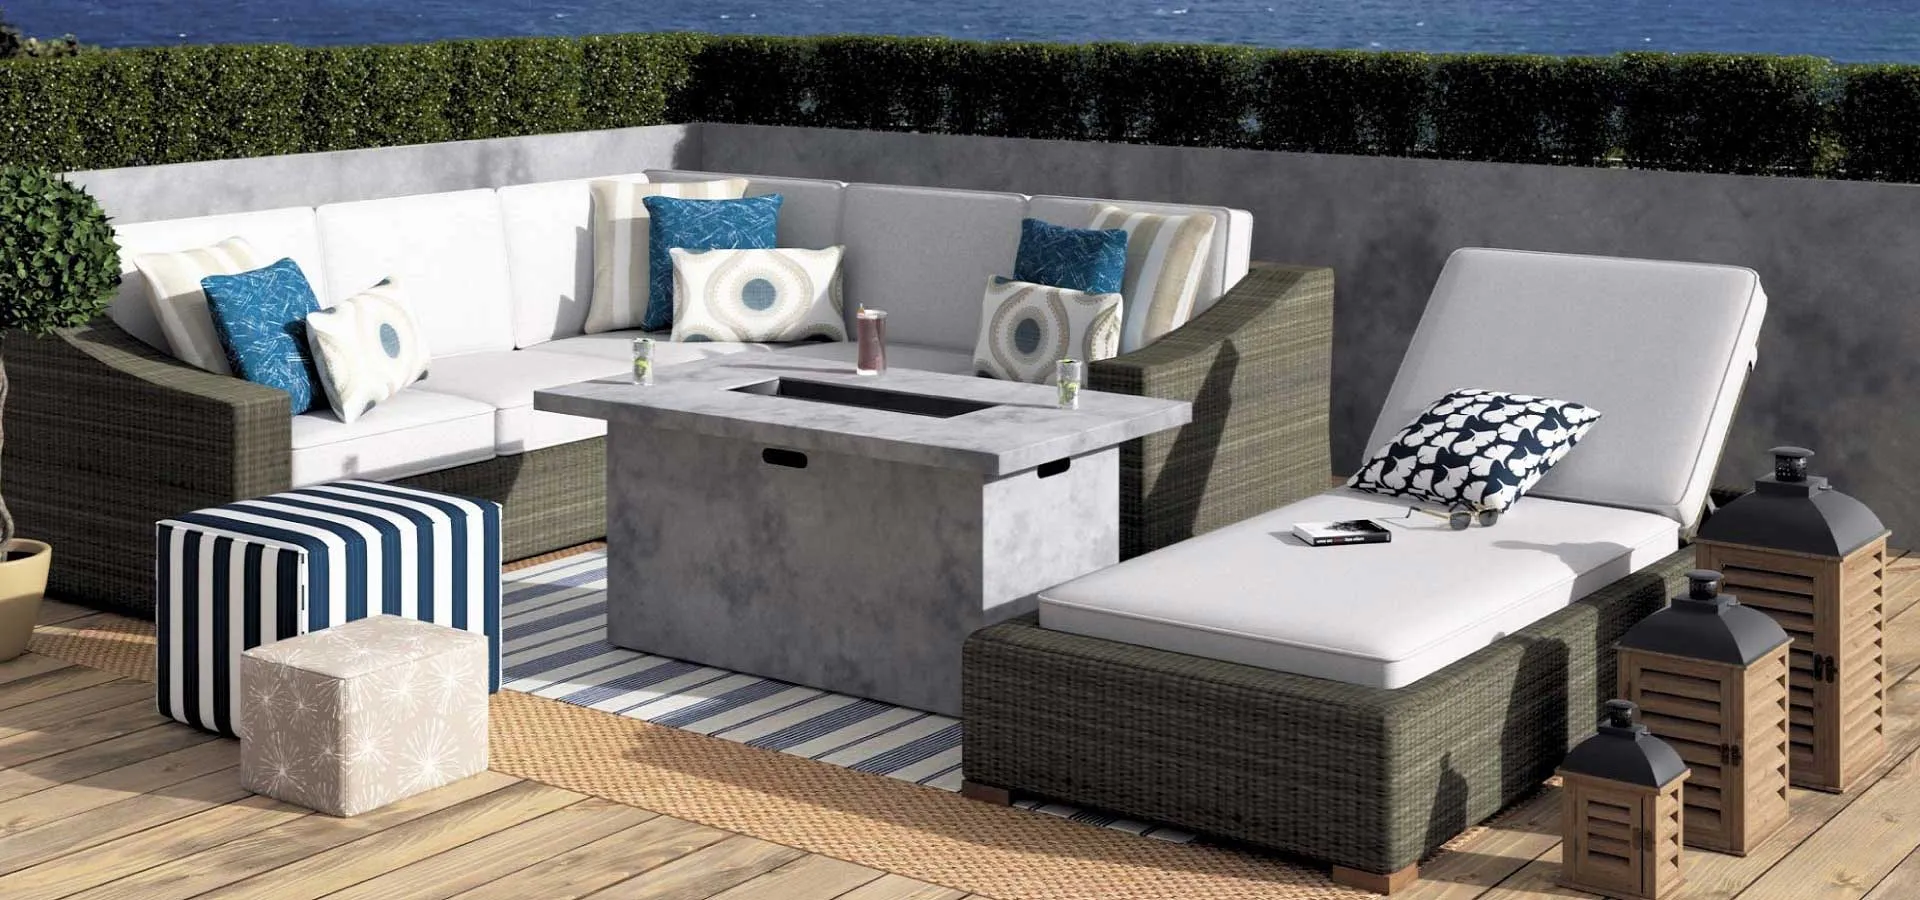 City Furniture x INSPI: 3D esencial en la experiencia cliente > Dassault Systèmes®